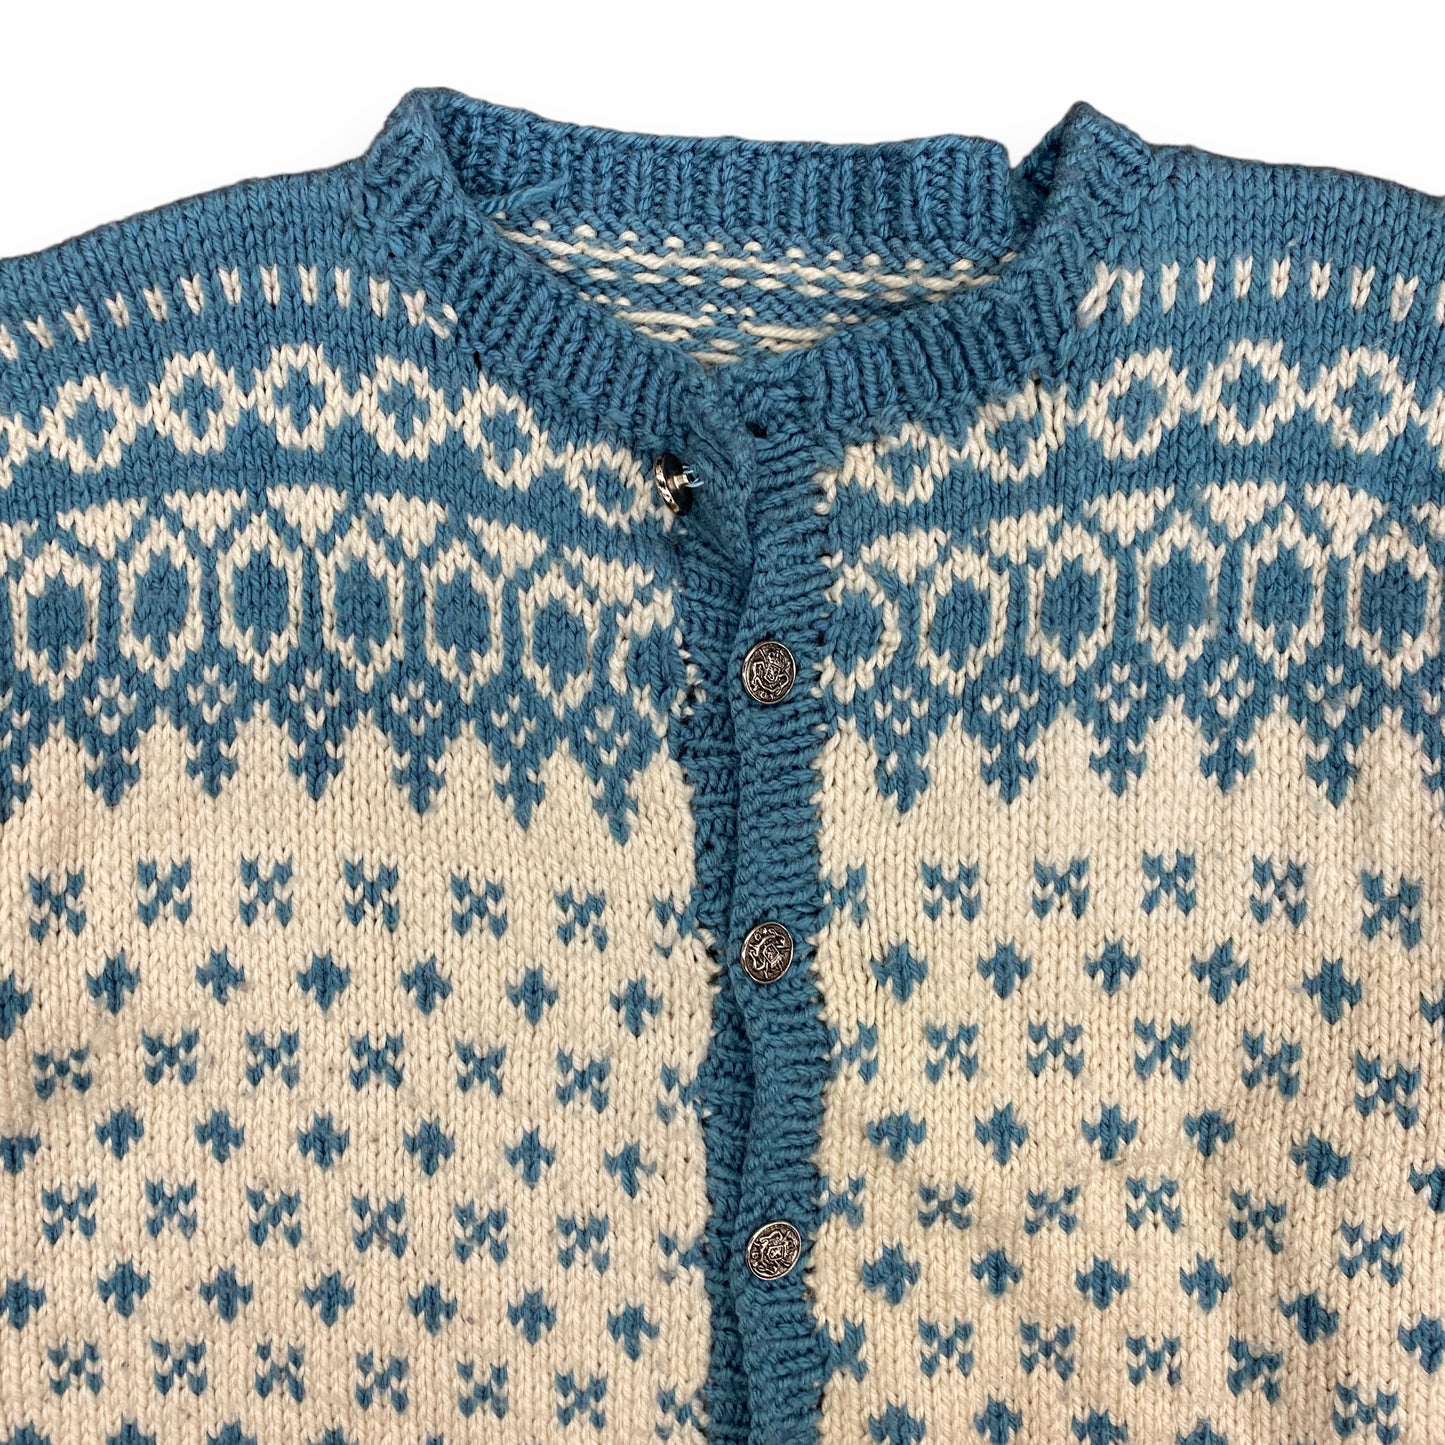 1970s Hand-Knit Blue & white Button Up Ski Sweater - Size L/XL